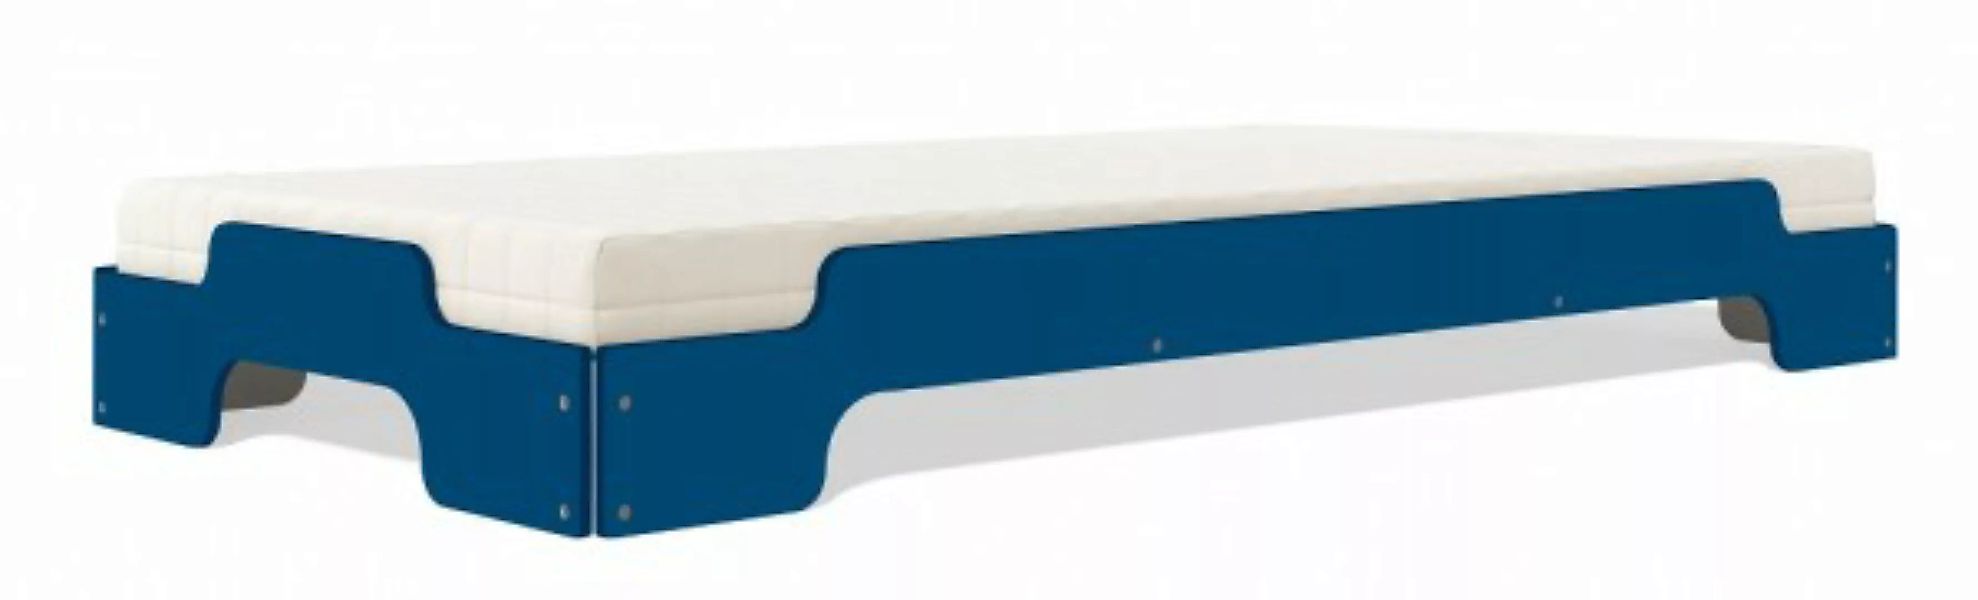 Stapelliege KLASSIK - Farbig kapitänsblau RAL 240 30 35 90 x 190 cm günstig online kaufen